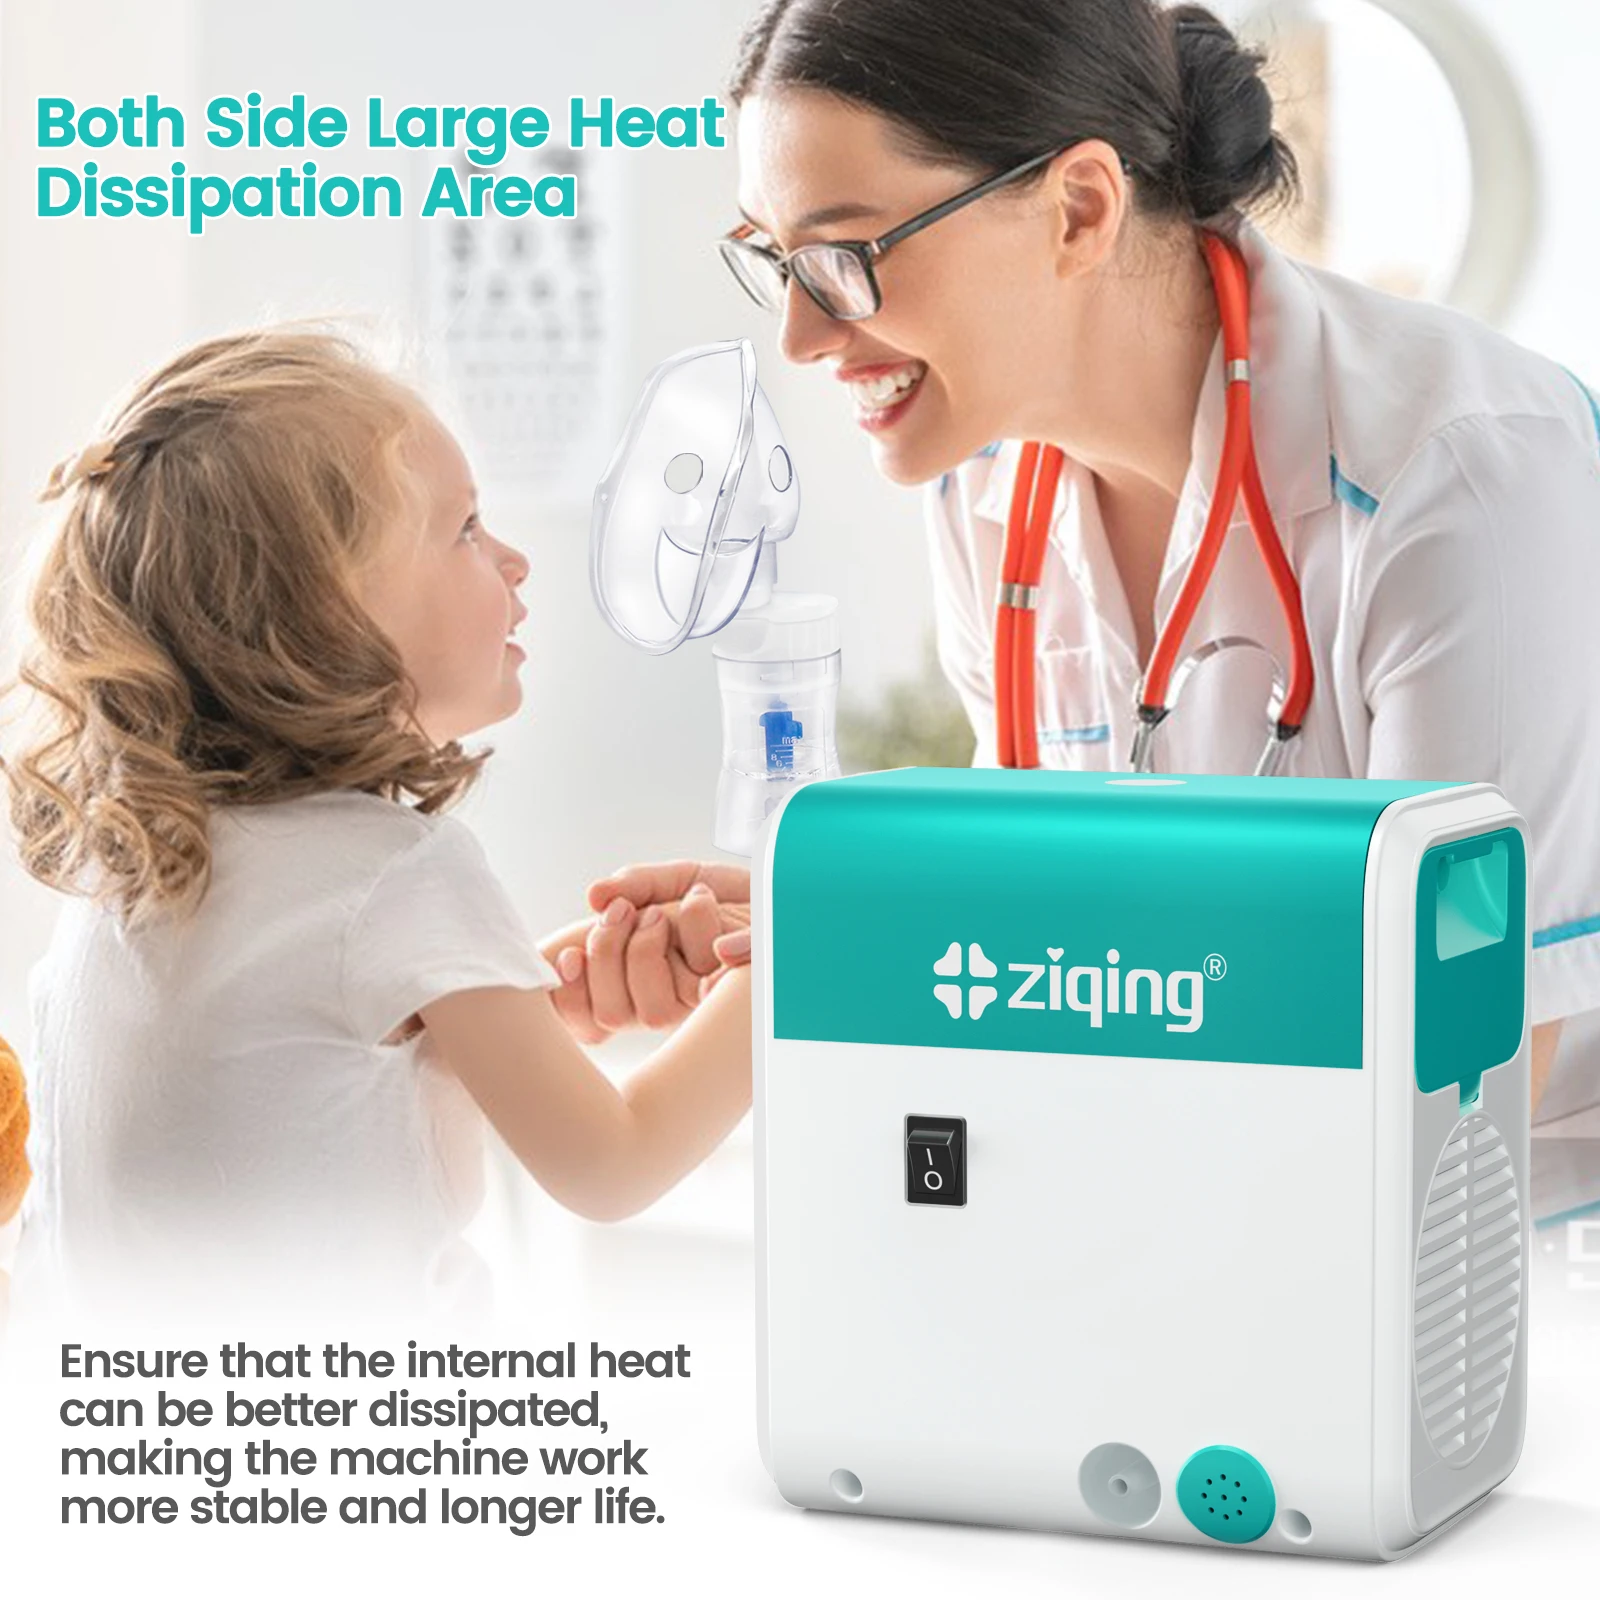 

ziqing Home Medical Inhaler Nebulizer Portable Inalador Nebulizador Atomizer Compressor Humidifier inhalator for Kids Adult